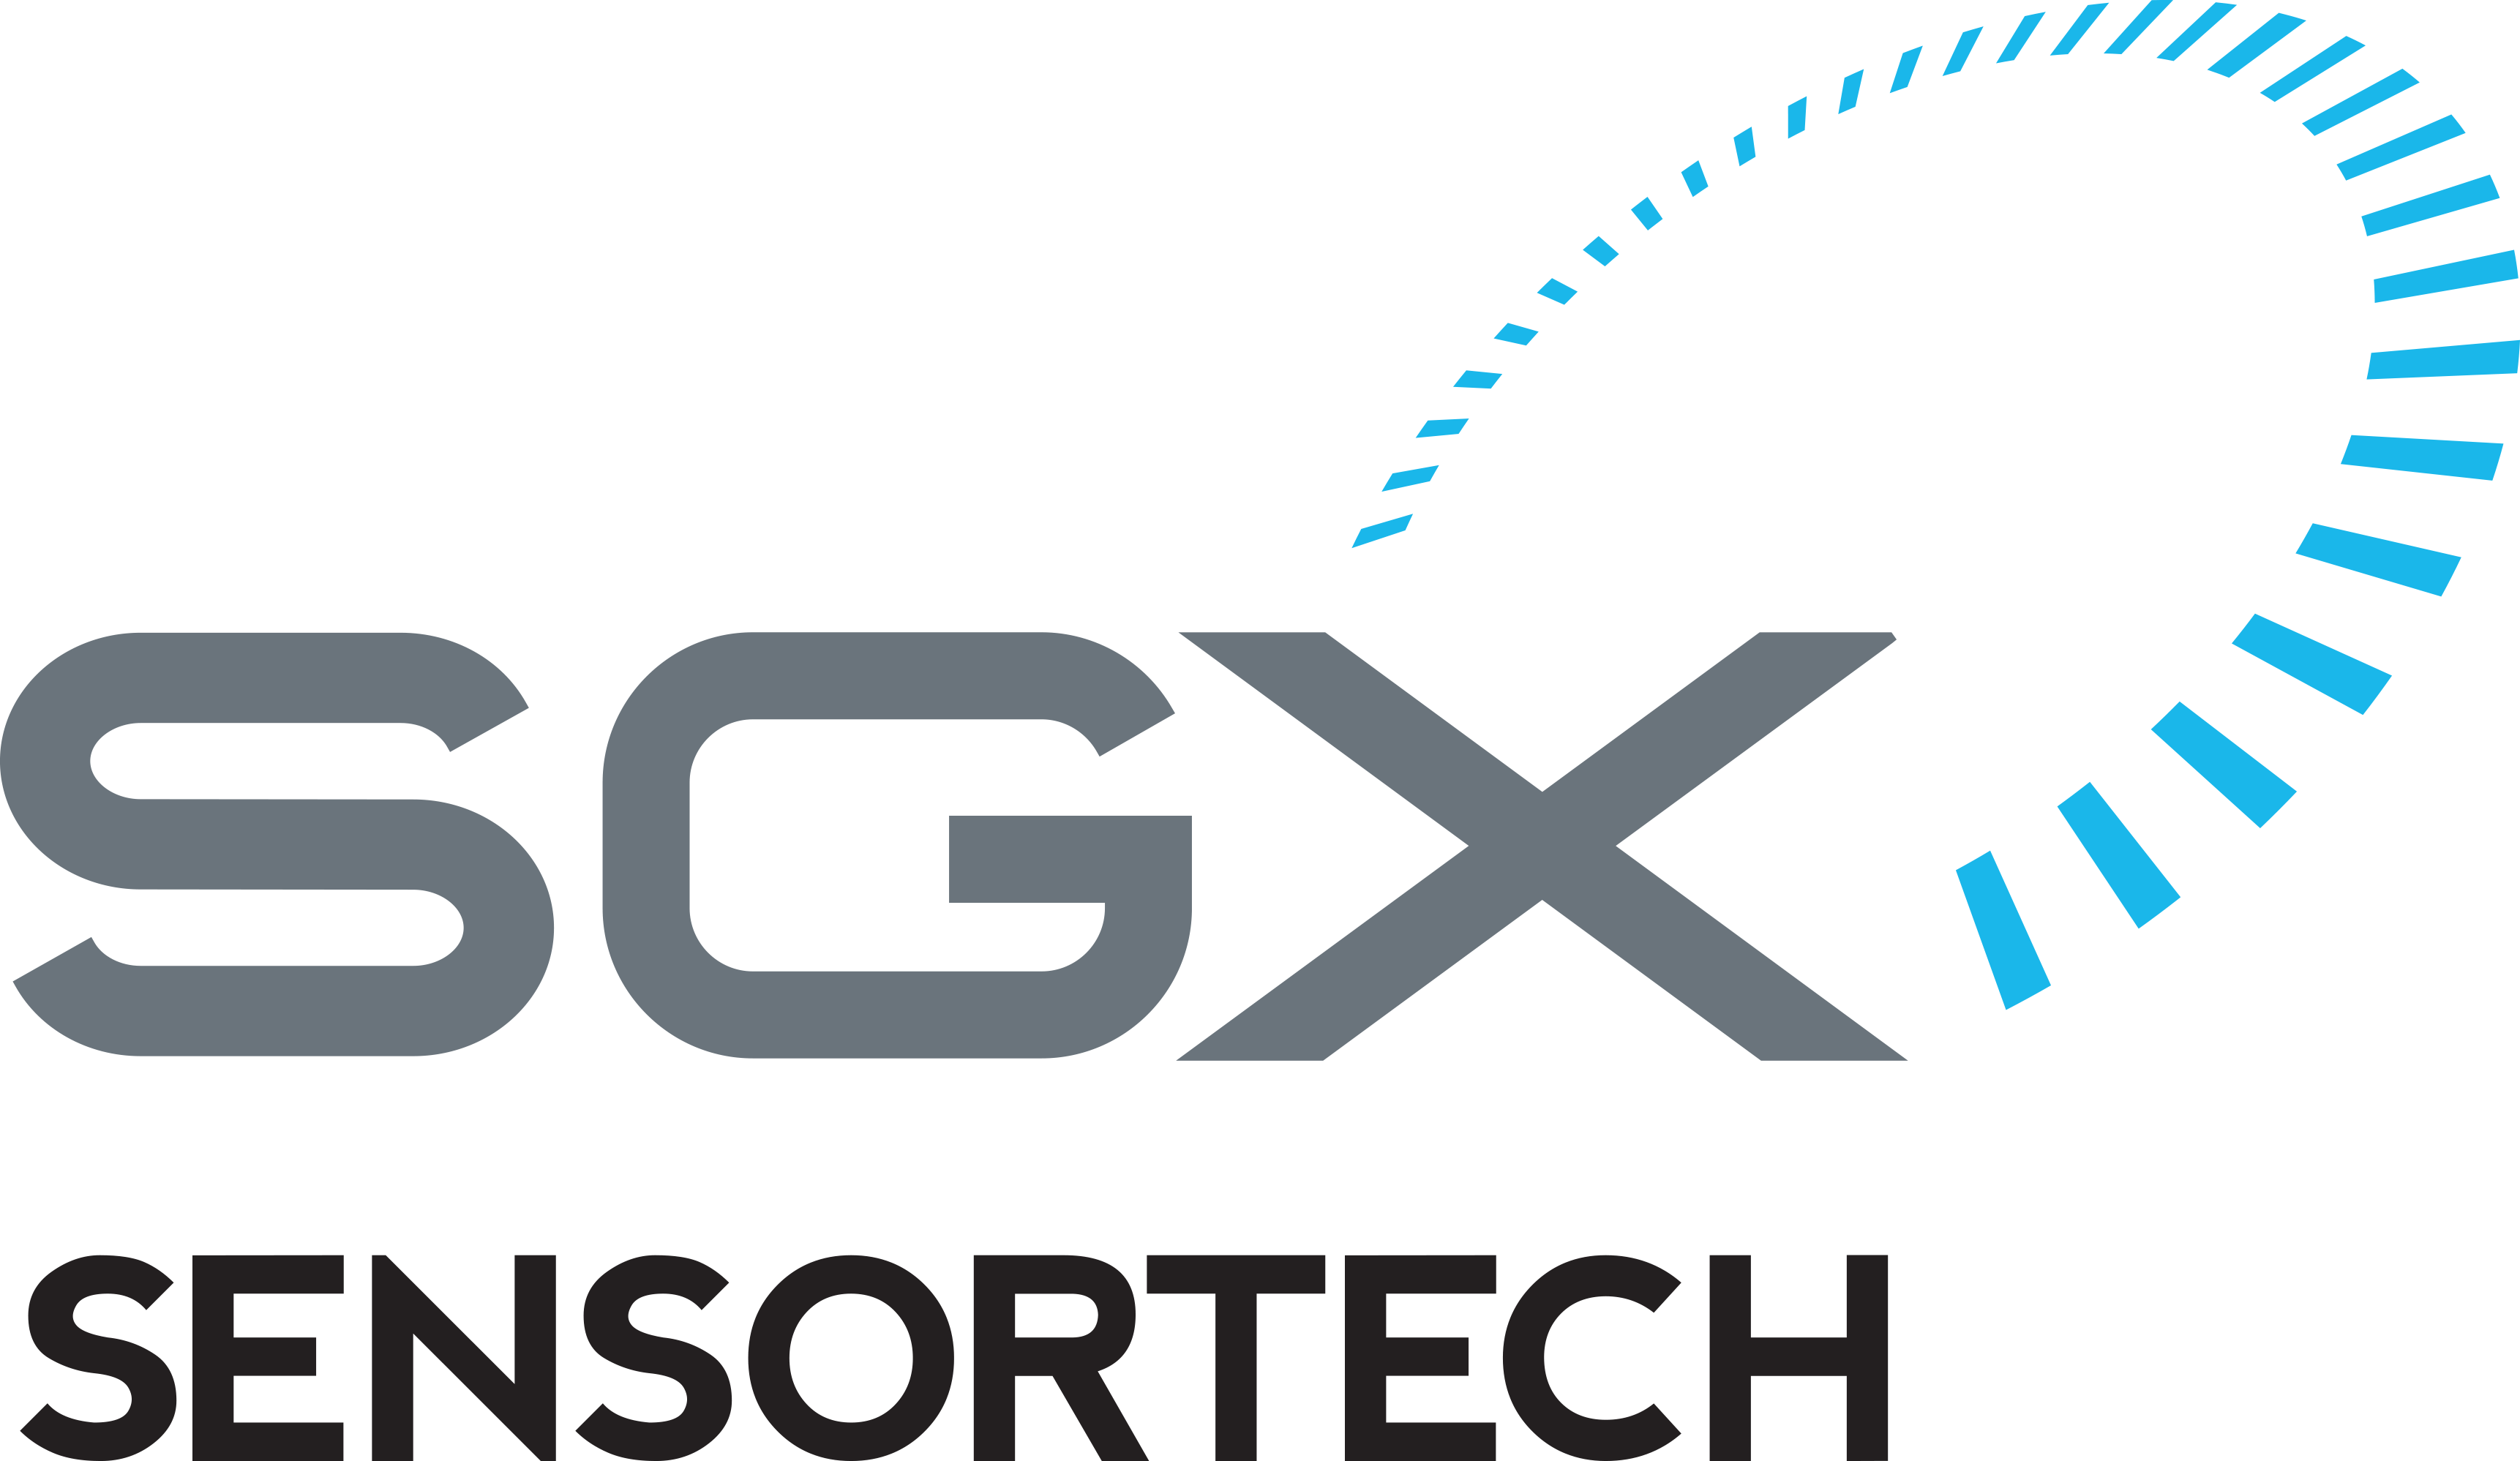 Amphenol SGX Sensortech